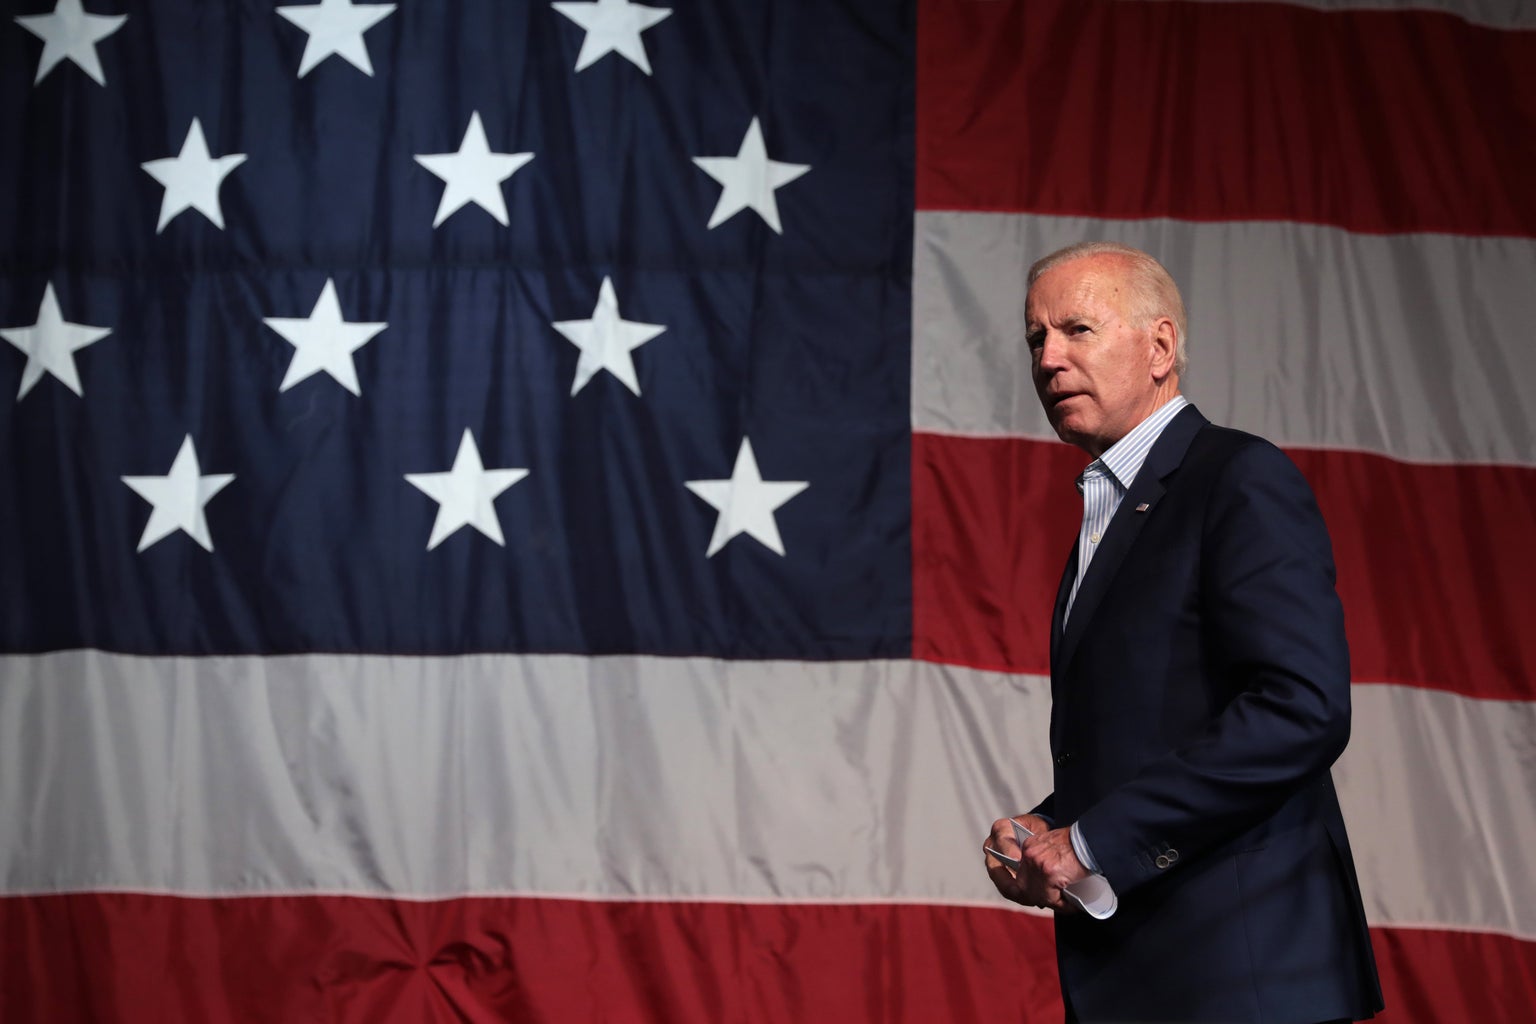 Joe Biden speaking in front of an American flag